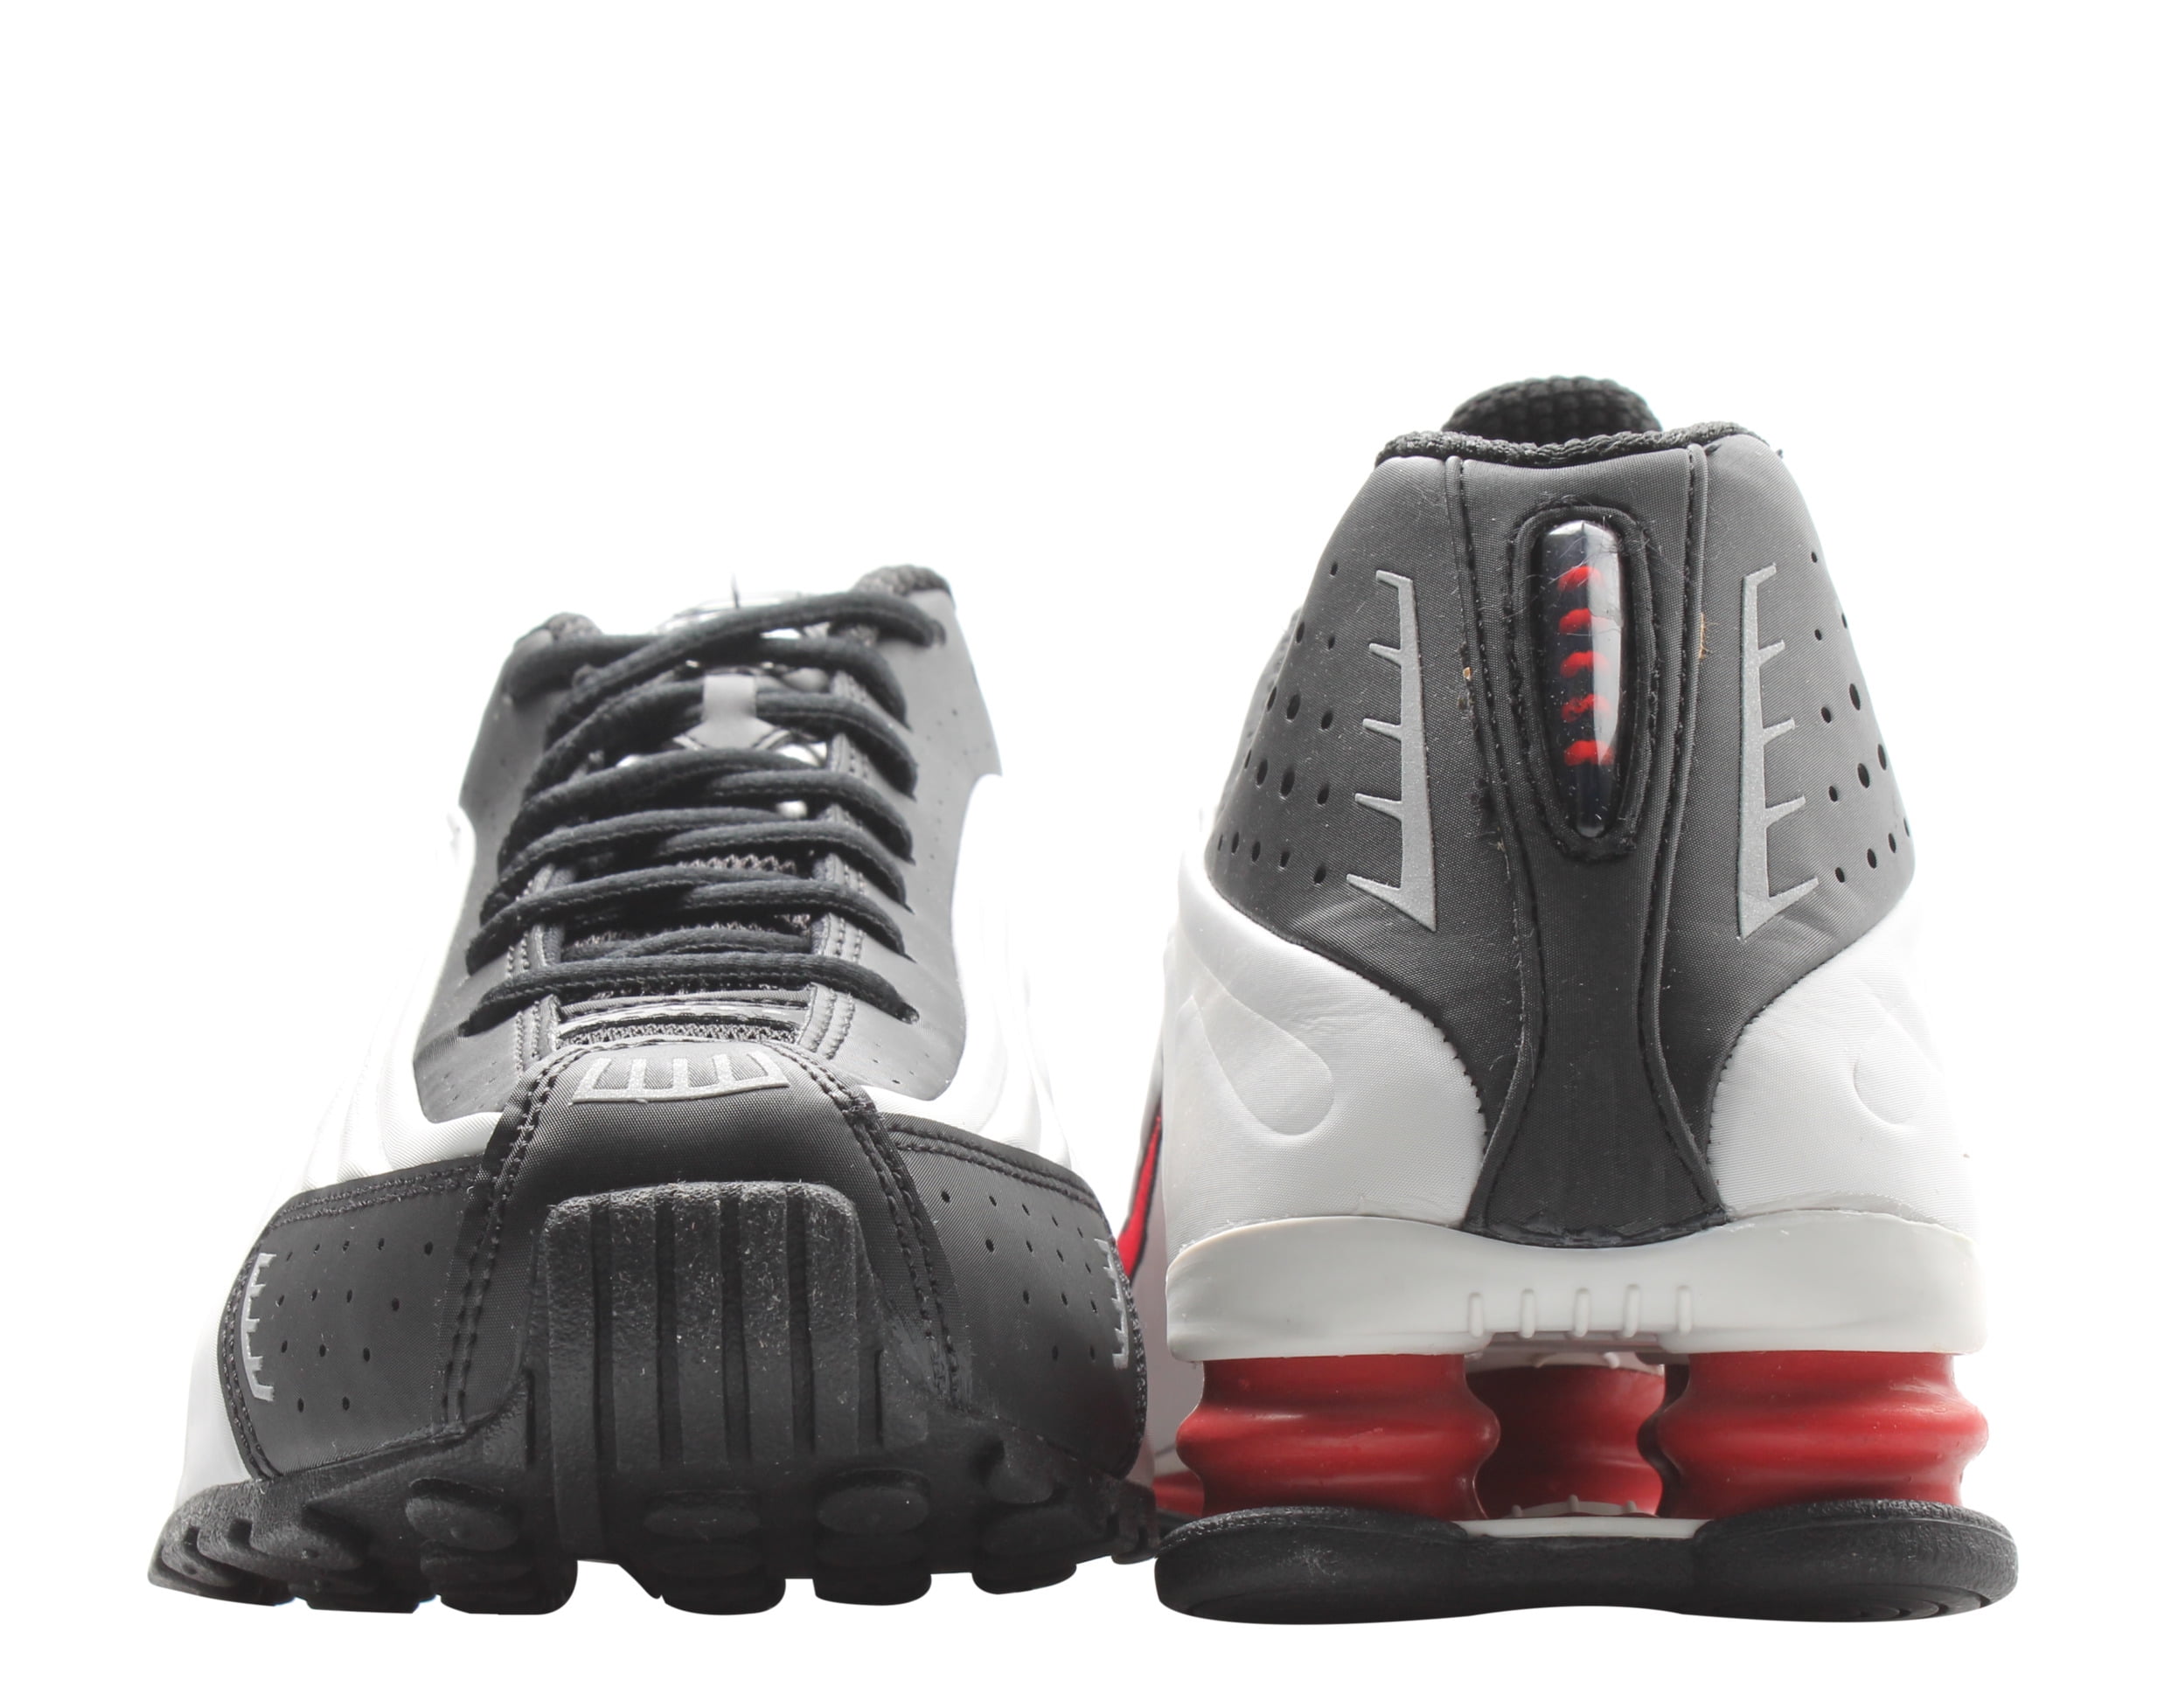 Nike Men's Shox R4 Life Style Sneakers - Walmart.com